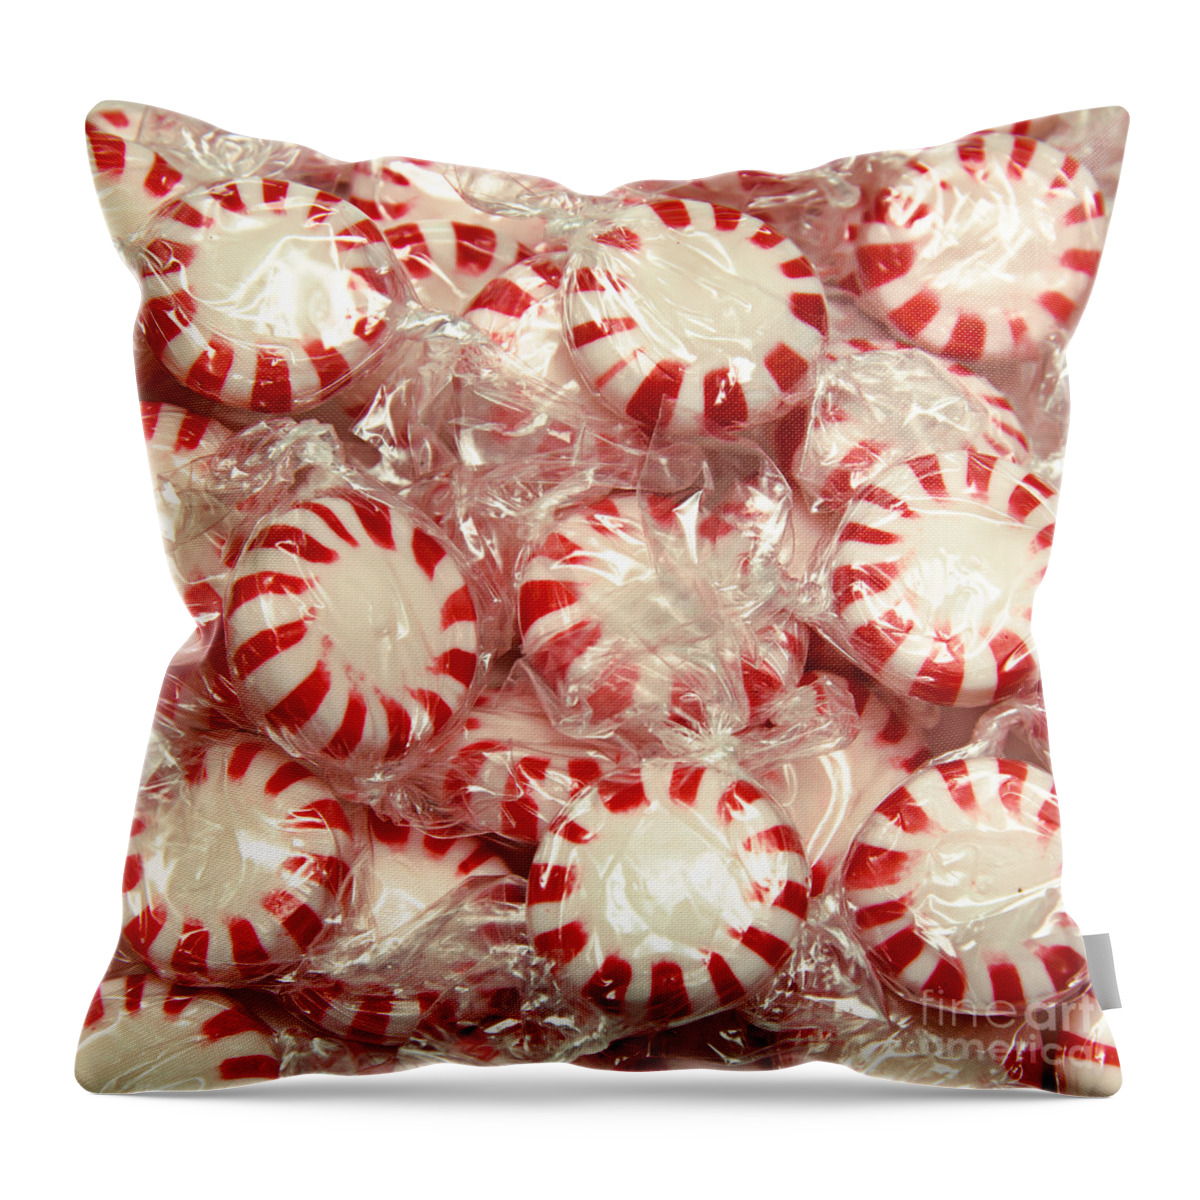 Pillow Decorative Throw Peppermint Candies